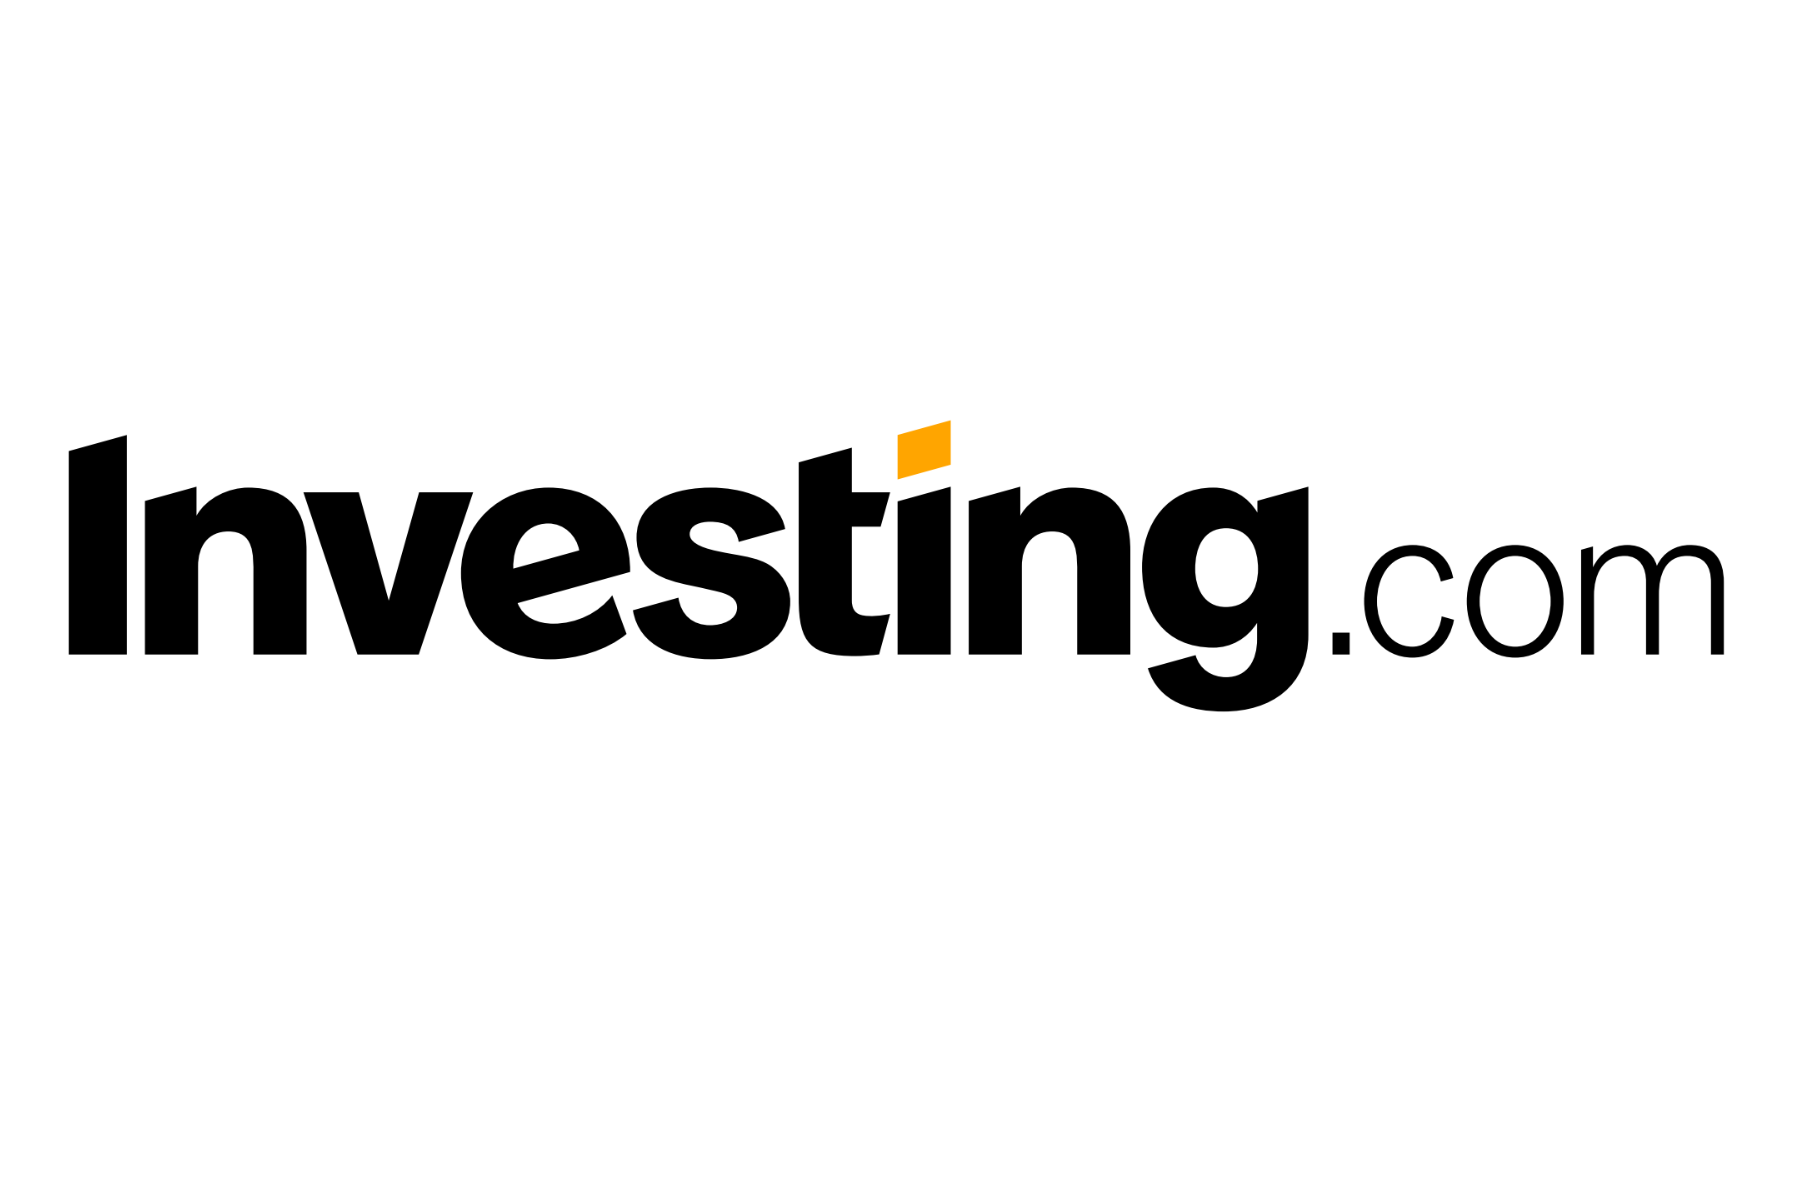 Великом com. Investing.com. Investing лого. Investing.com logo. WINVESTOR логотип.